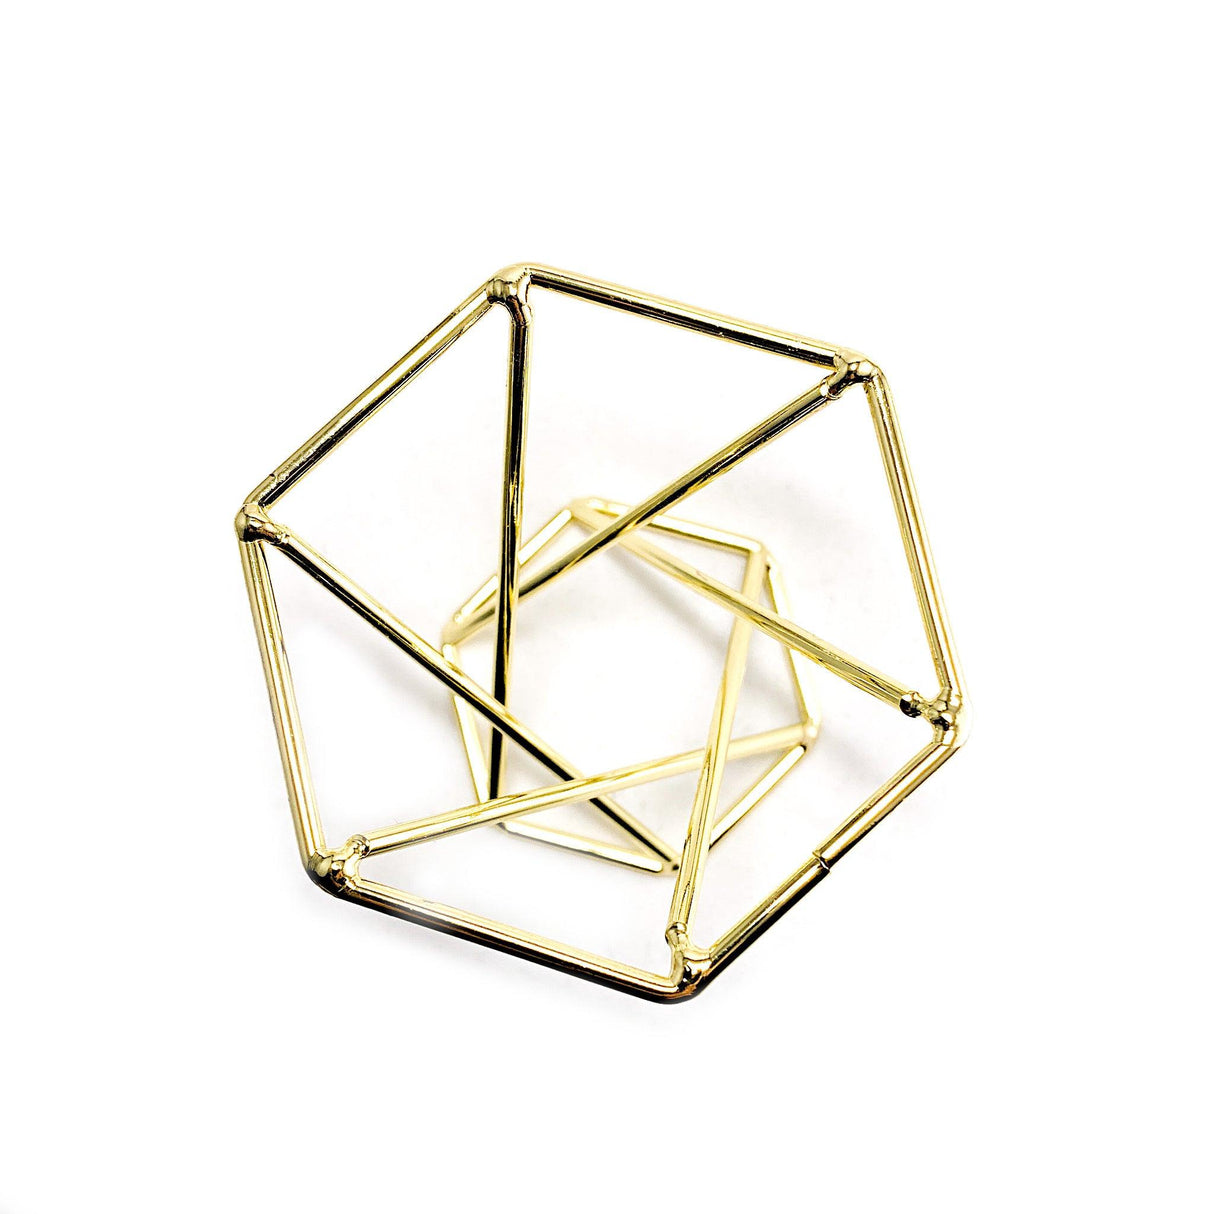 Sphere Stand - Hexagonal twist SPH02 - Nature's Magick